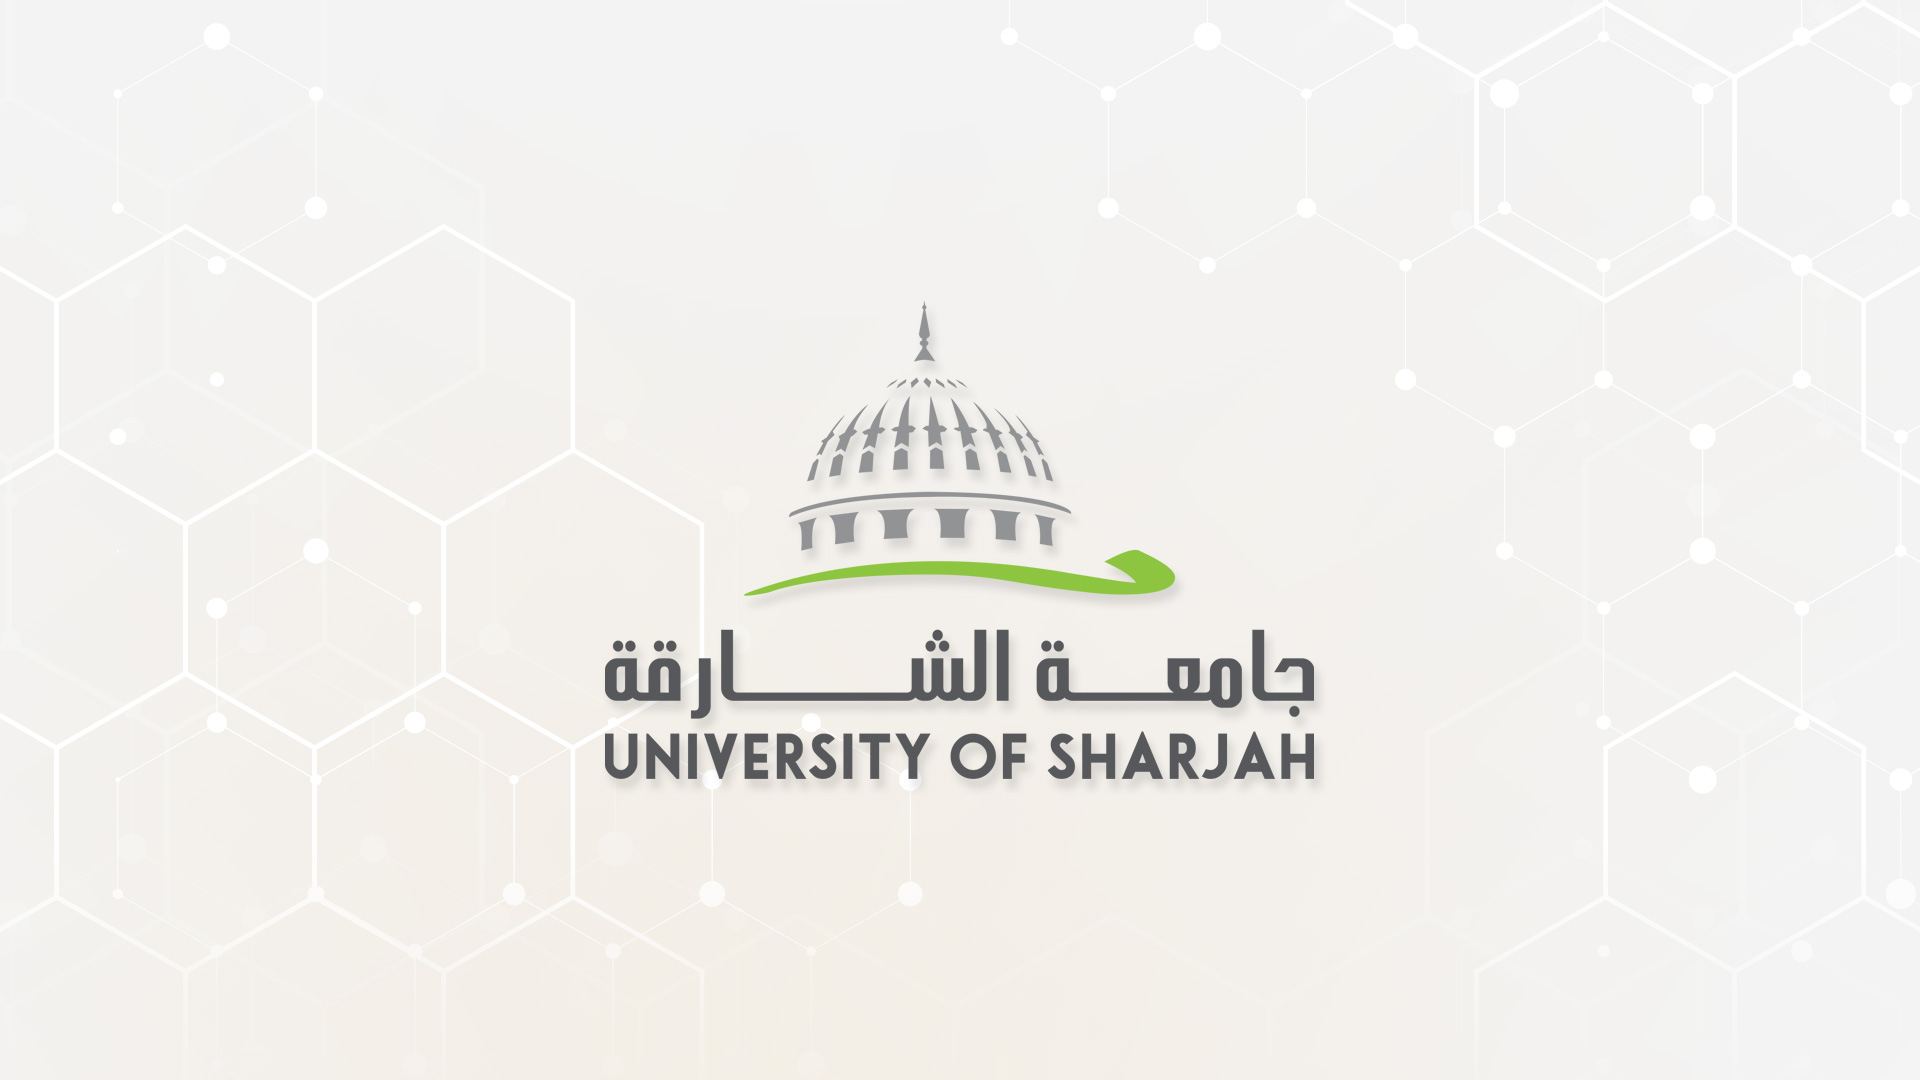 Environmental awareness exhibition at the University of Sharjah